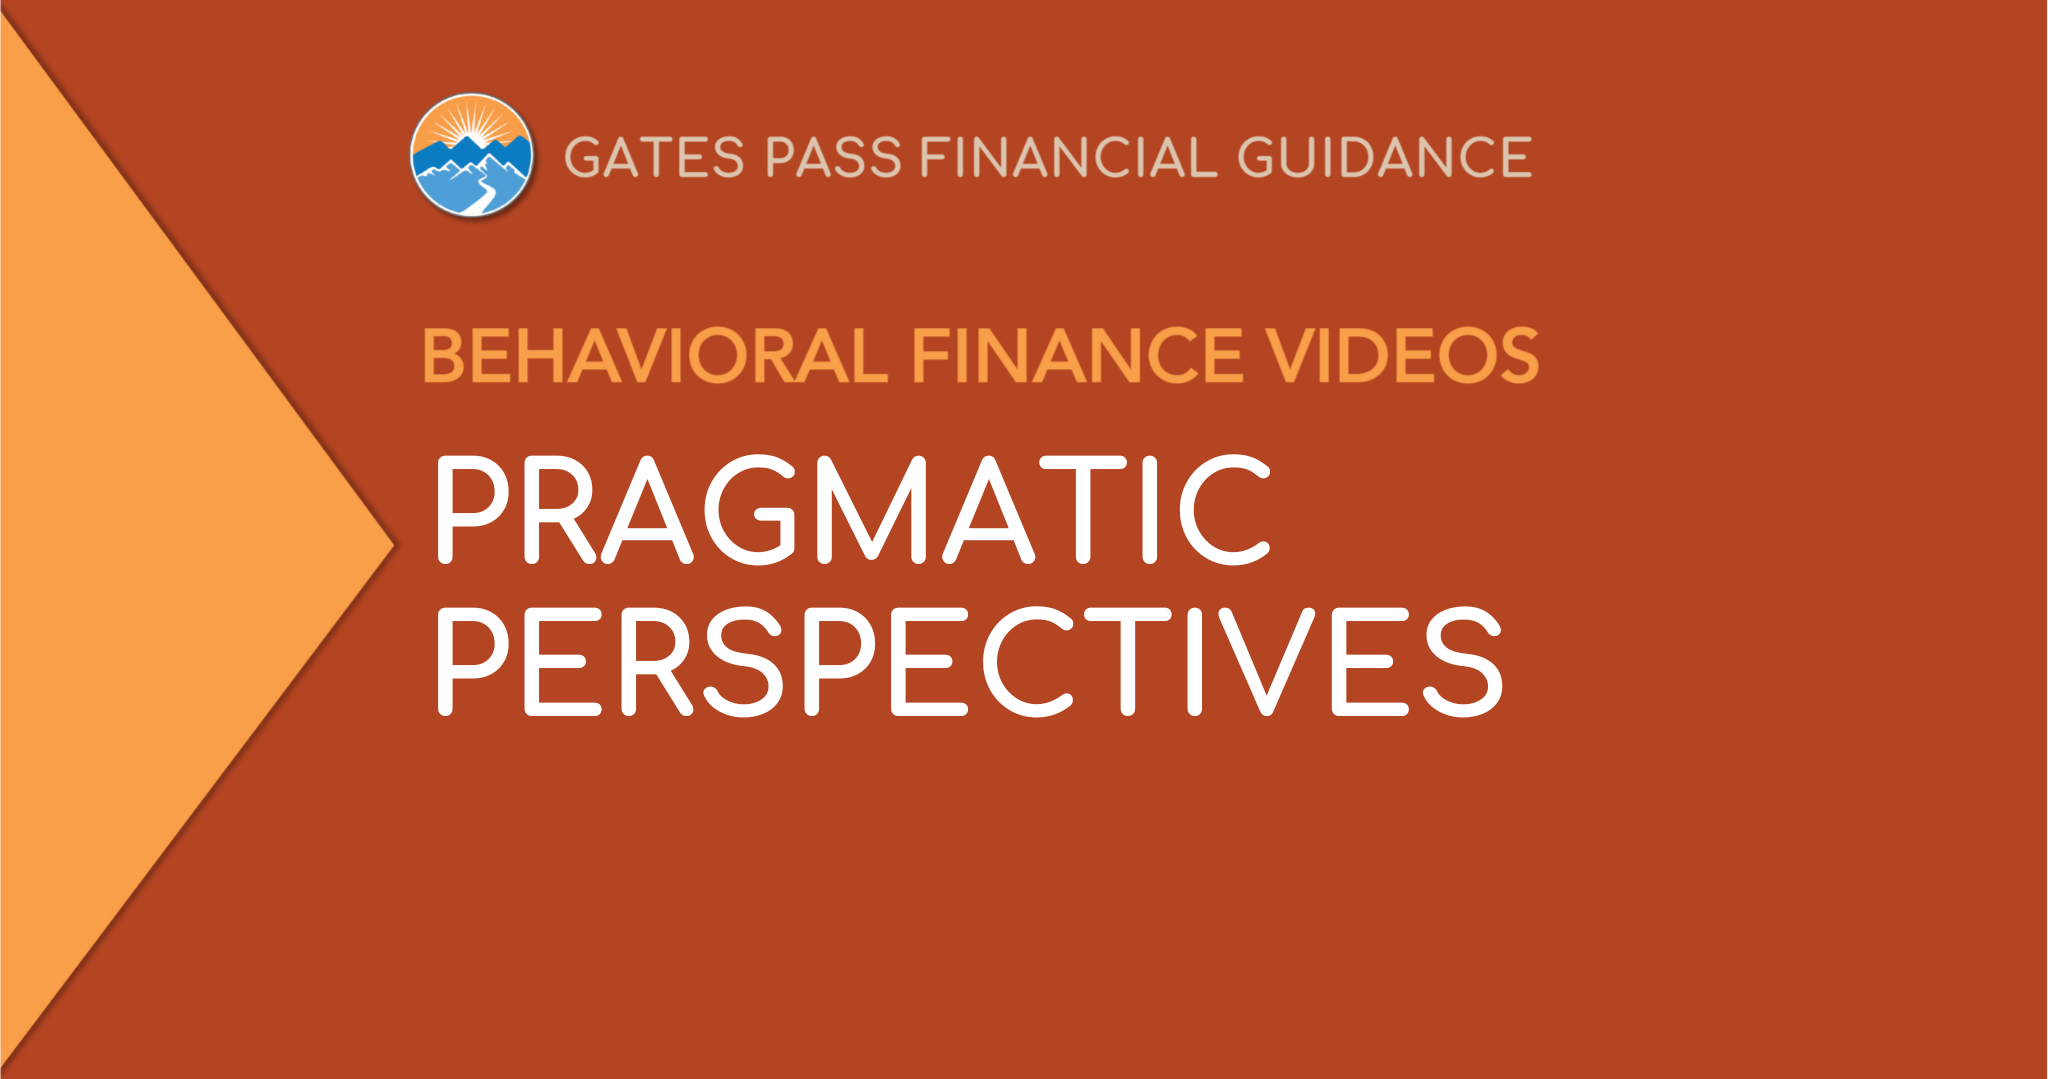 VIDEO: PRAGMATIC PERSPECTIVES - Gates Pass Advisors